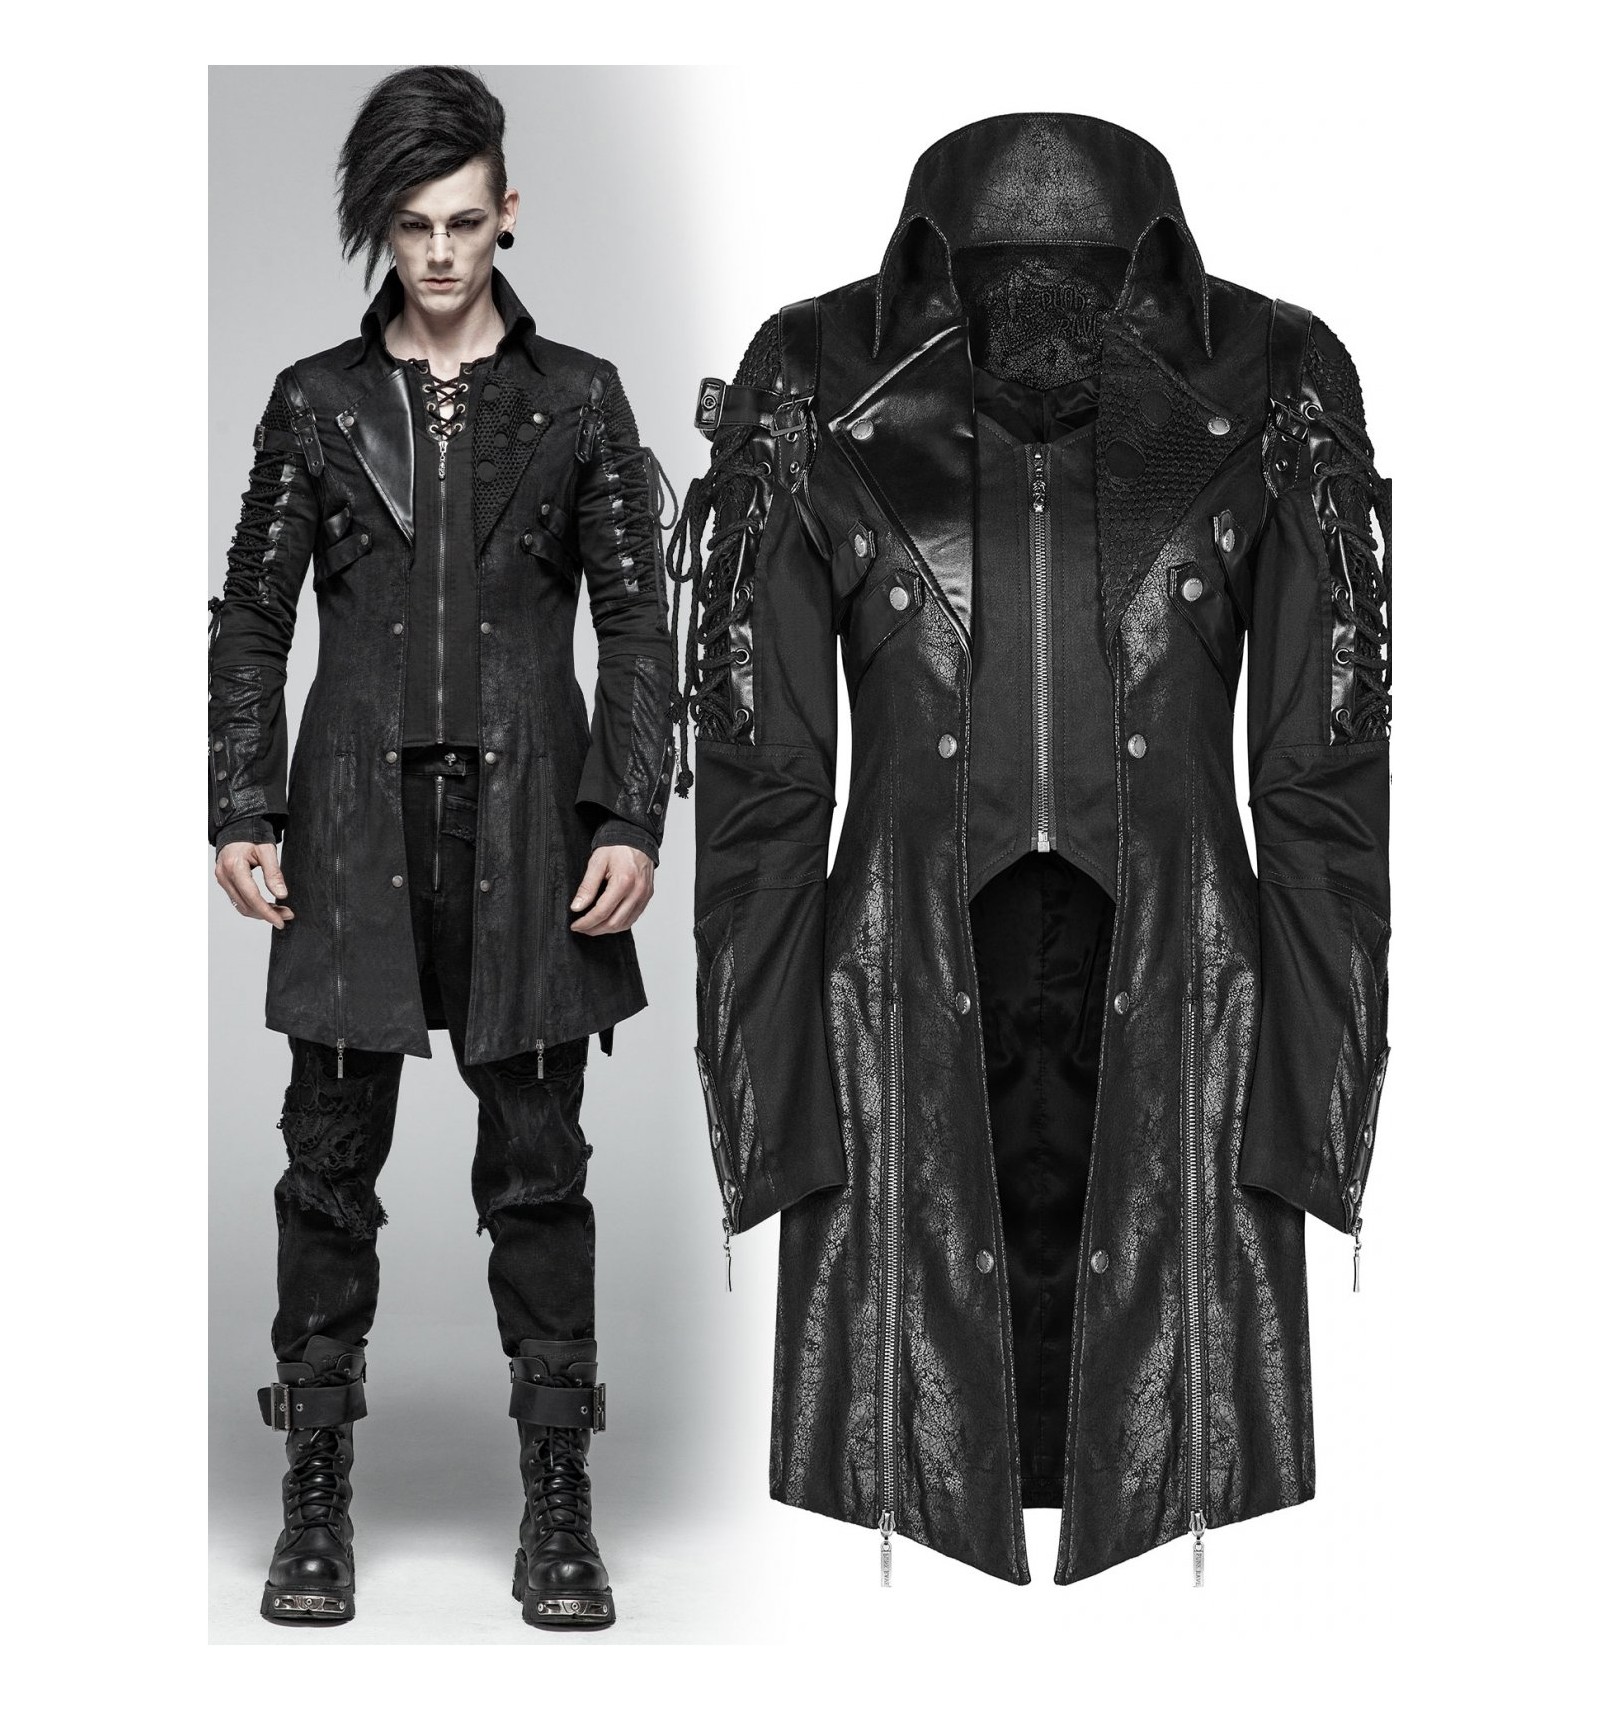 Poisonbllack - Gothic style women's jacket by Punk Rave - Gothic-Zone